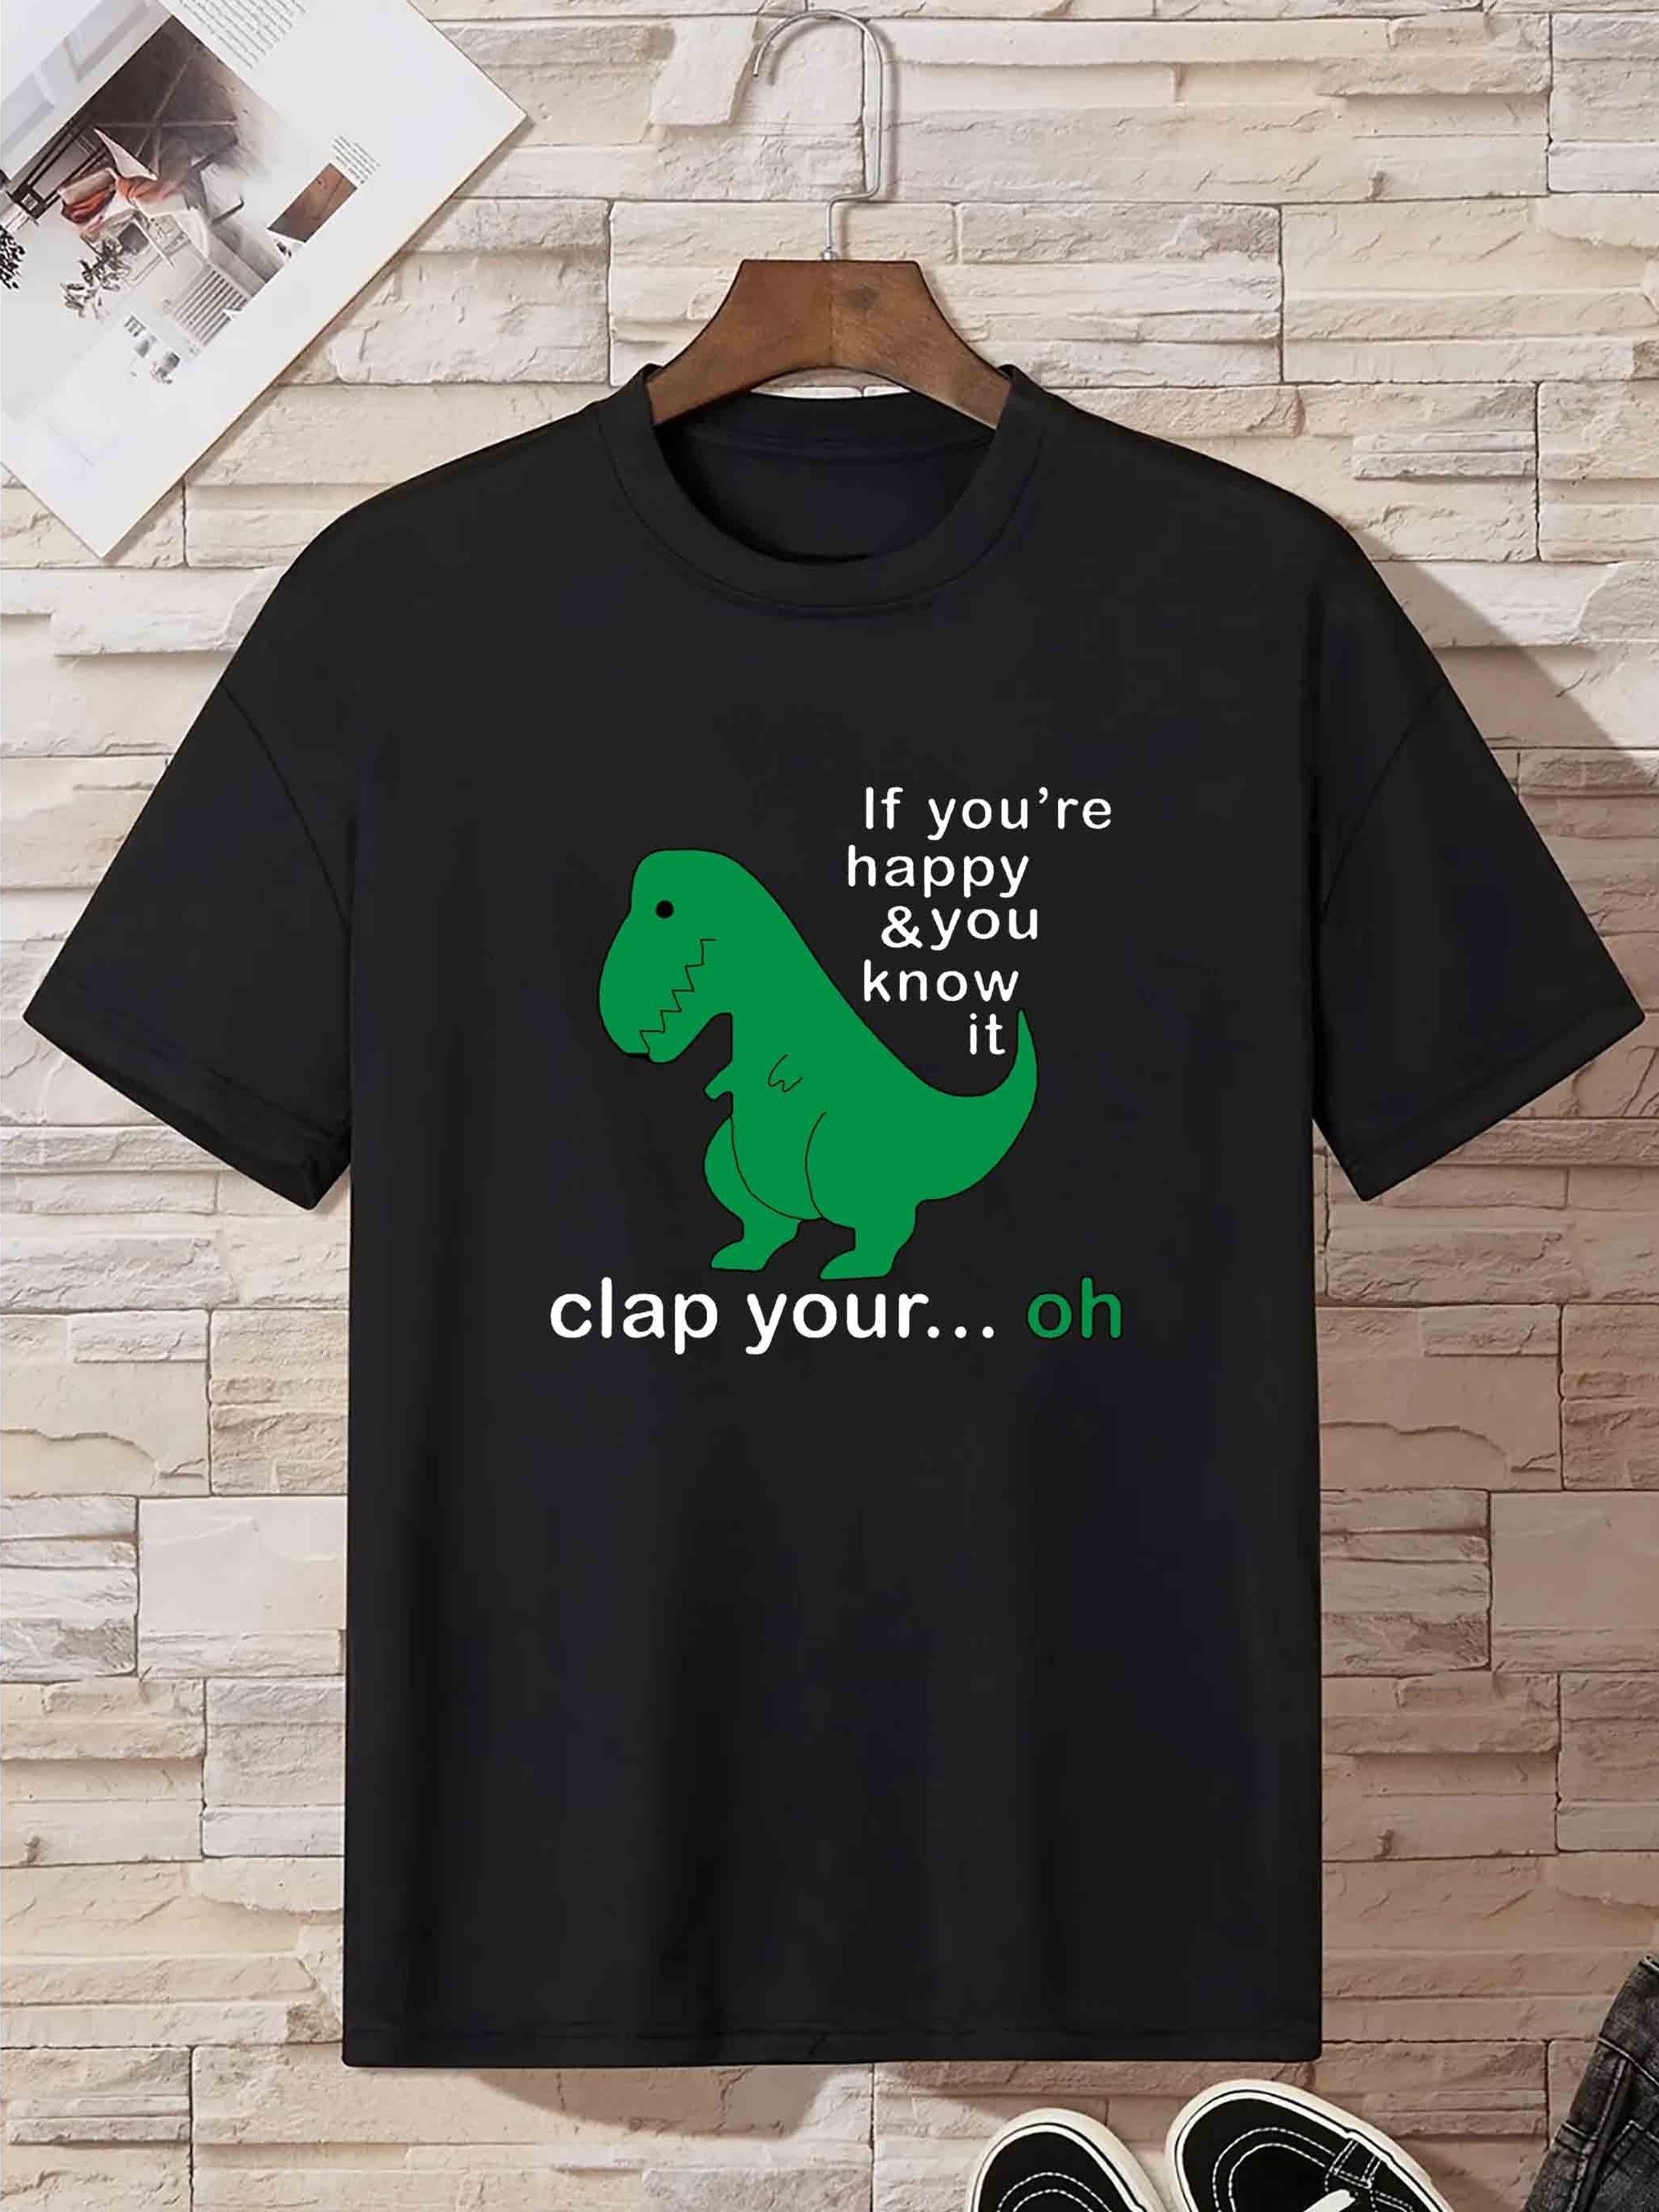 Flat Chest Meme T-Shirts for Sale